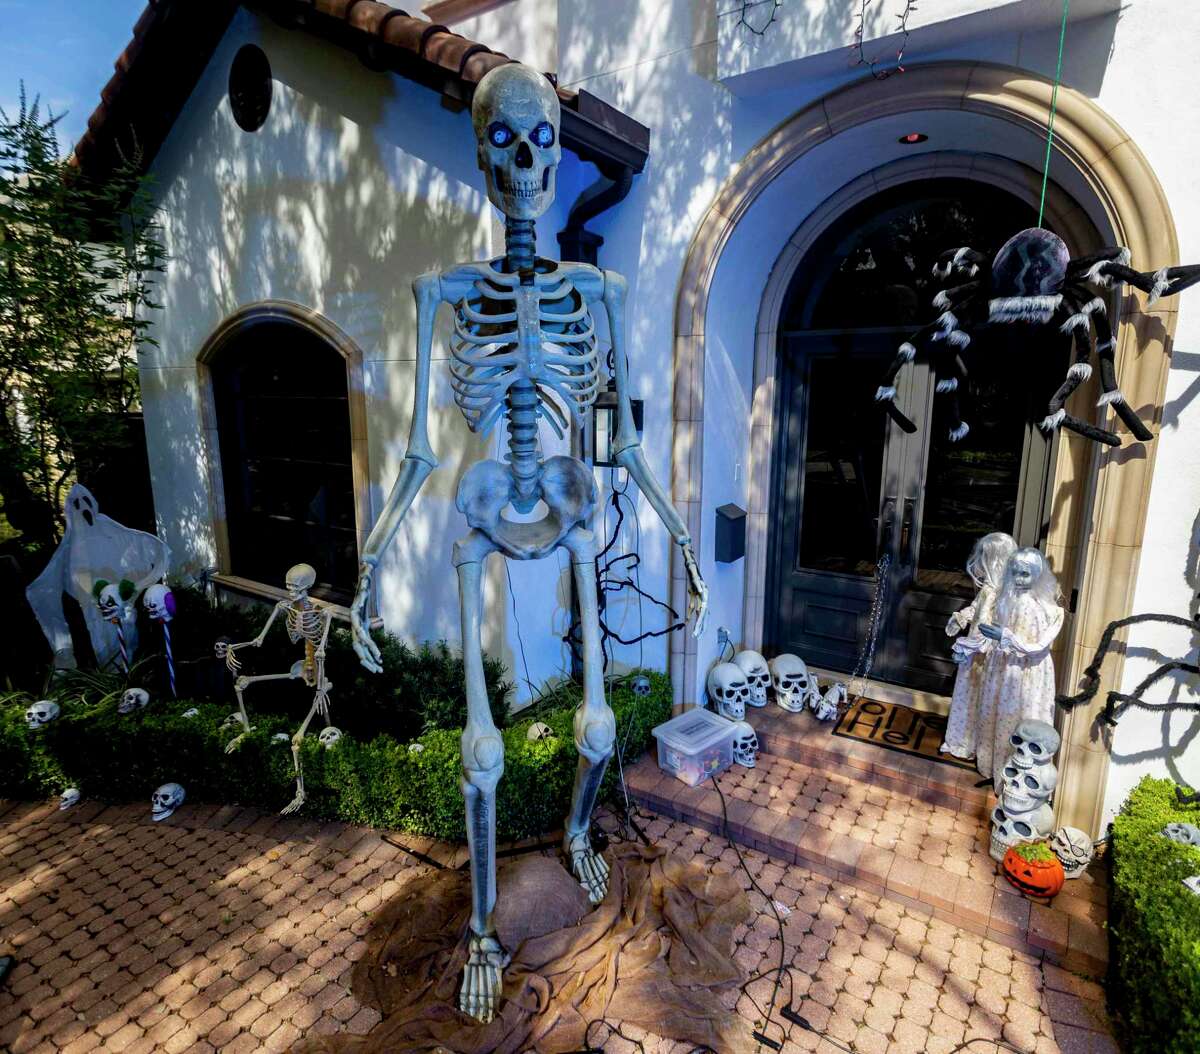 H-E-B sells 10-foot skeletons ahead of Halloween season